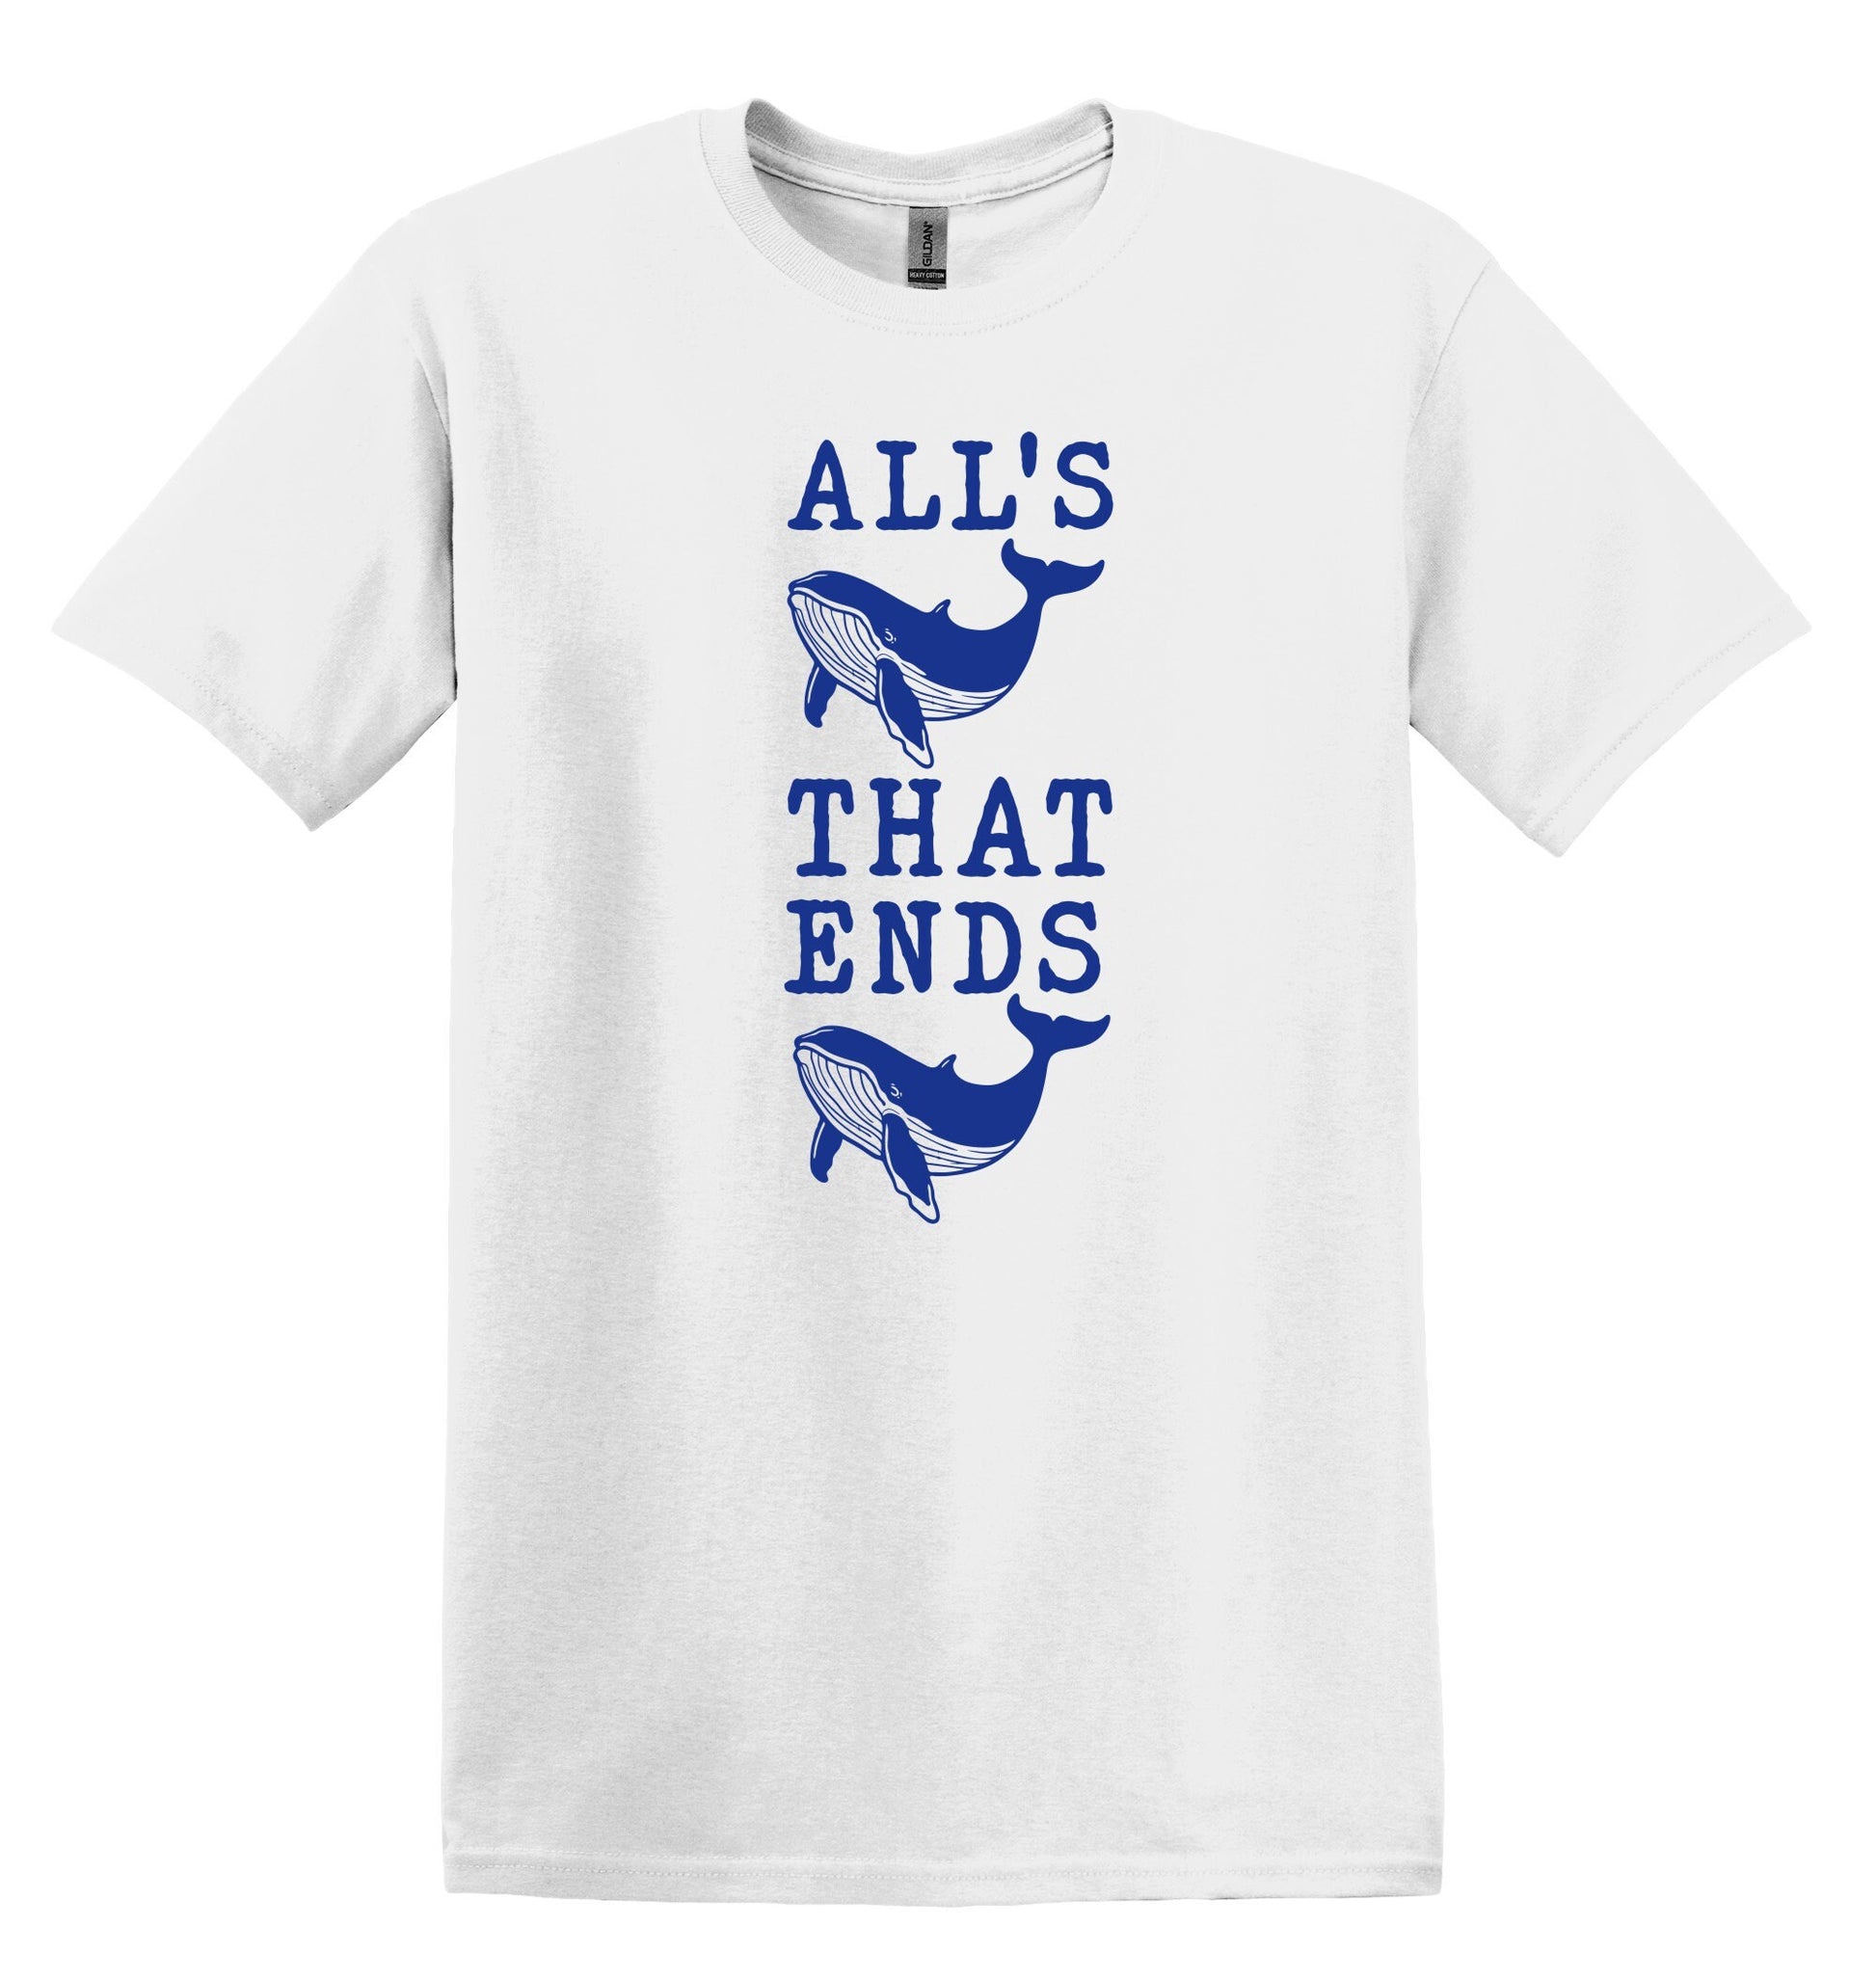 All's Whale that Ends Whale Shirt Graphic Shirt Funny Vintage Adult Funny Shirt Nostalgia T-Shirt Cotton Shirt Minimalist Shirt Gag Shirt